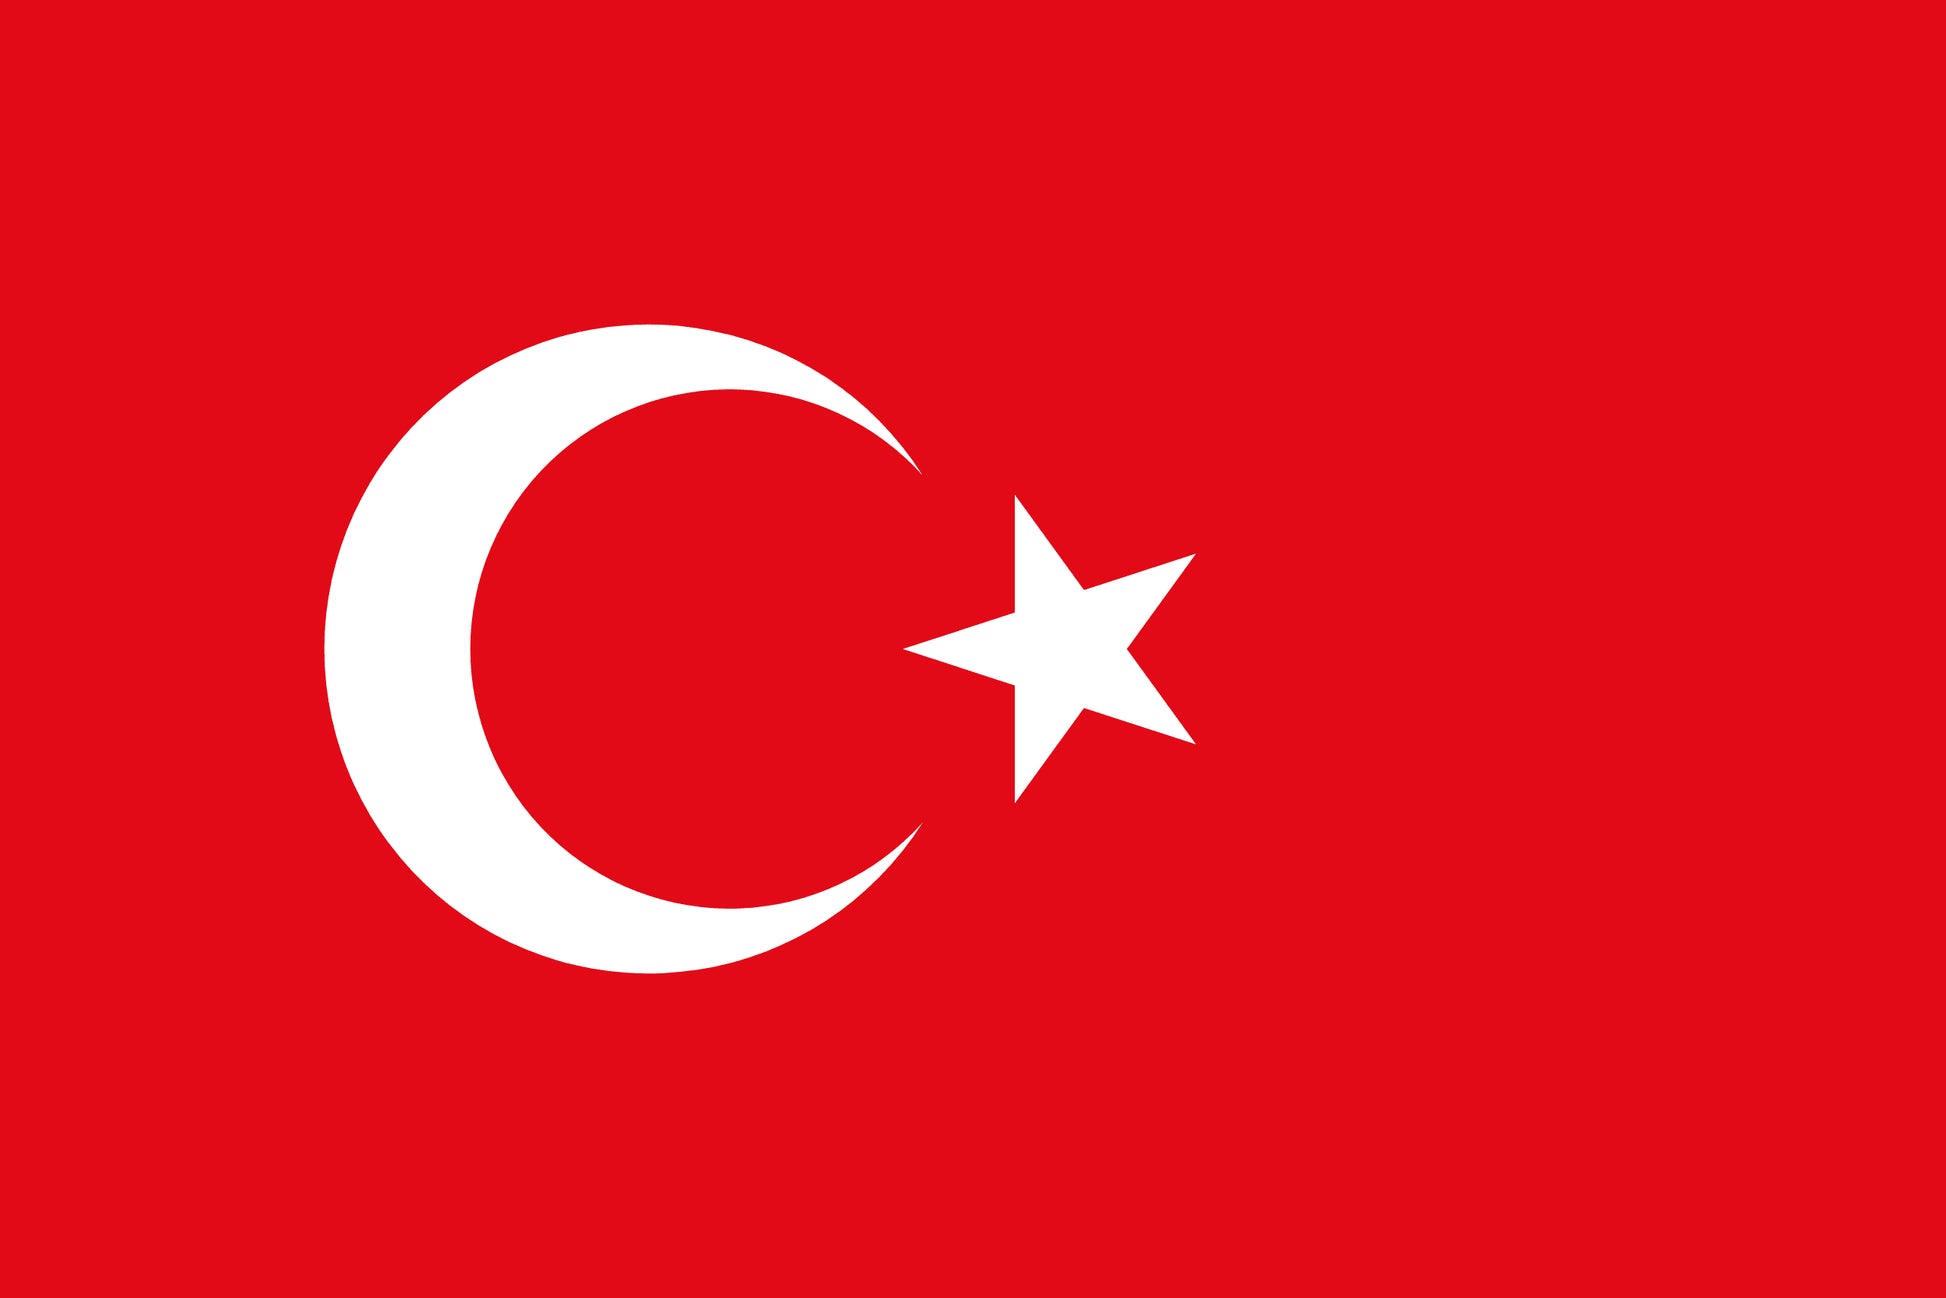 Flag of Turkey for TravelNet data eSIM product